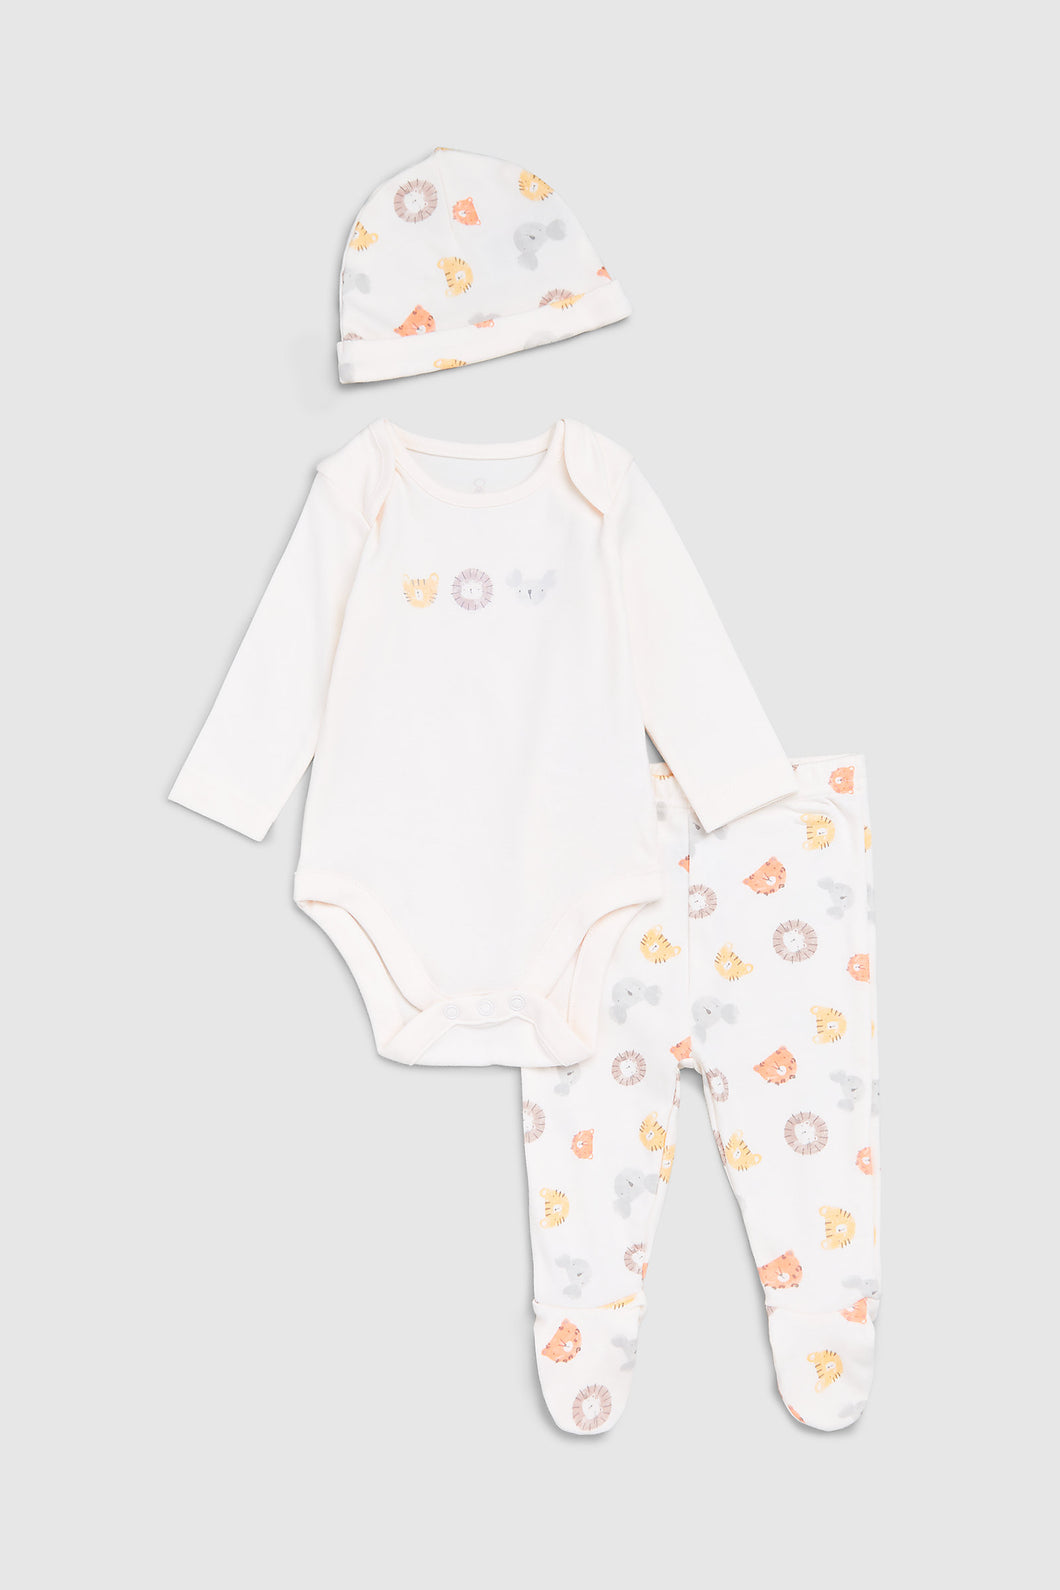 Mothercare Safari 3-Piece Baby Outfit Set